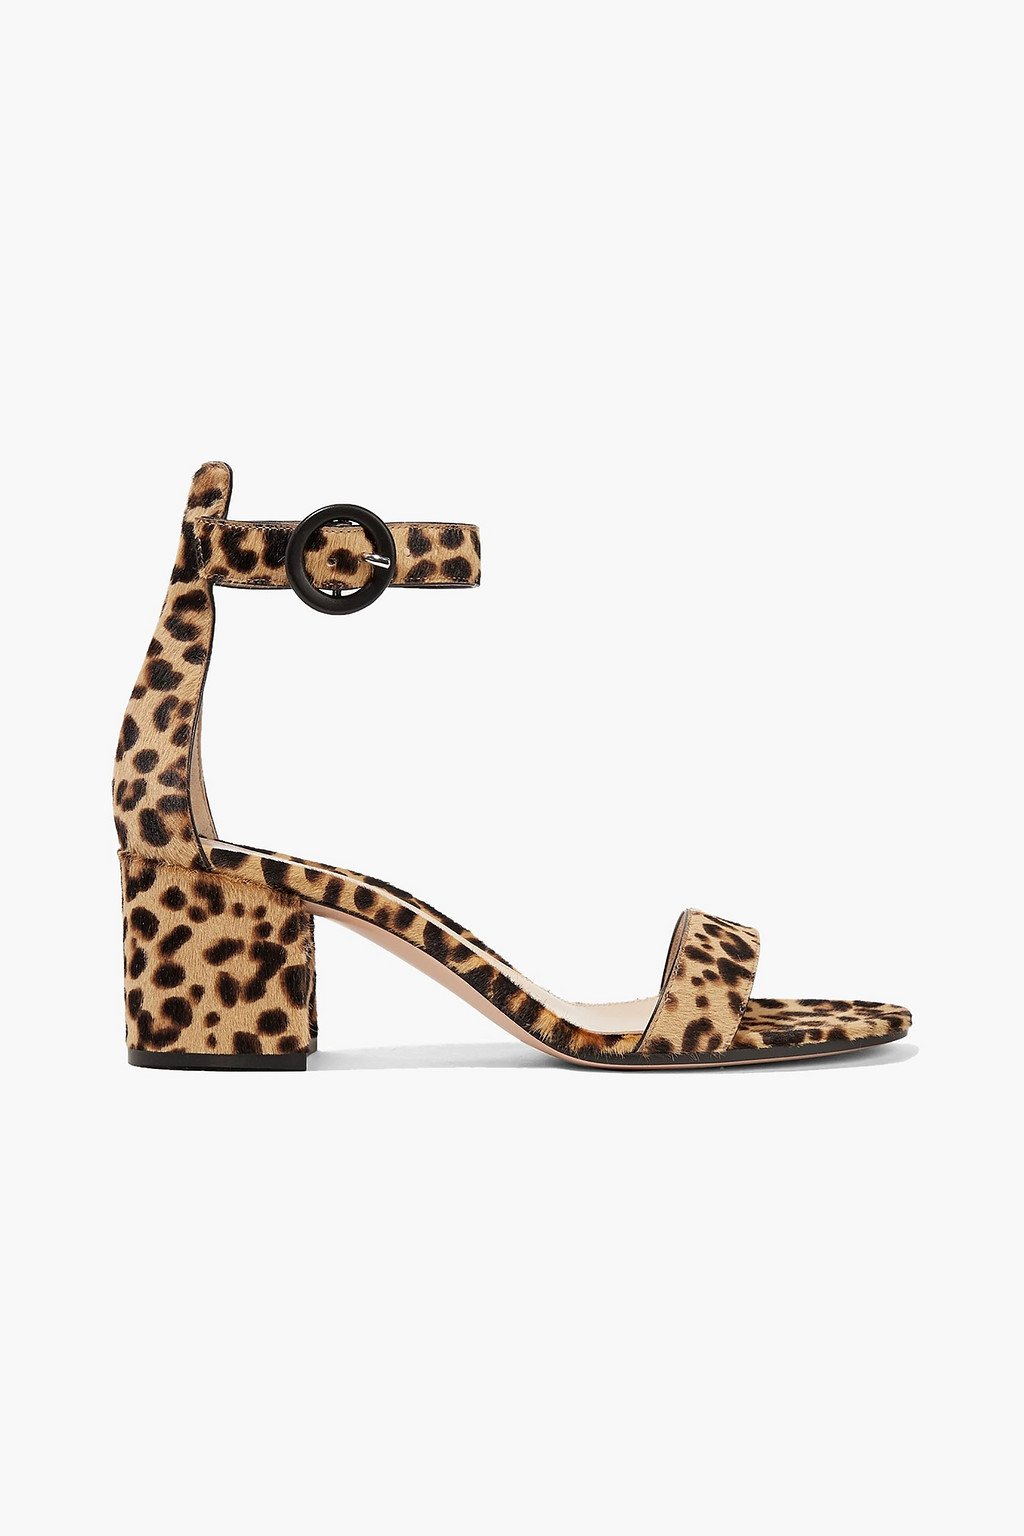 Gianvito Rossi Versilia 60 Sandals in Leopard-Print Calf-Hair.jpg